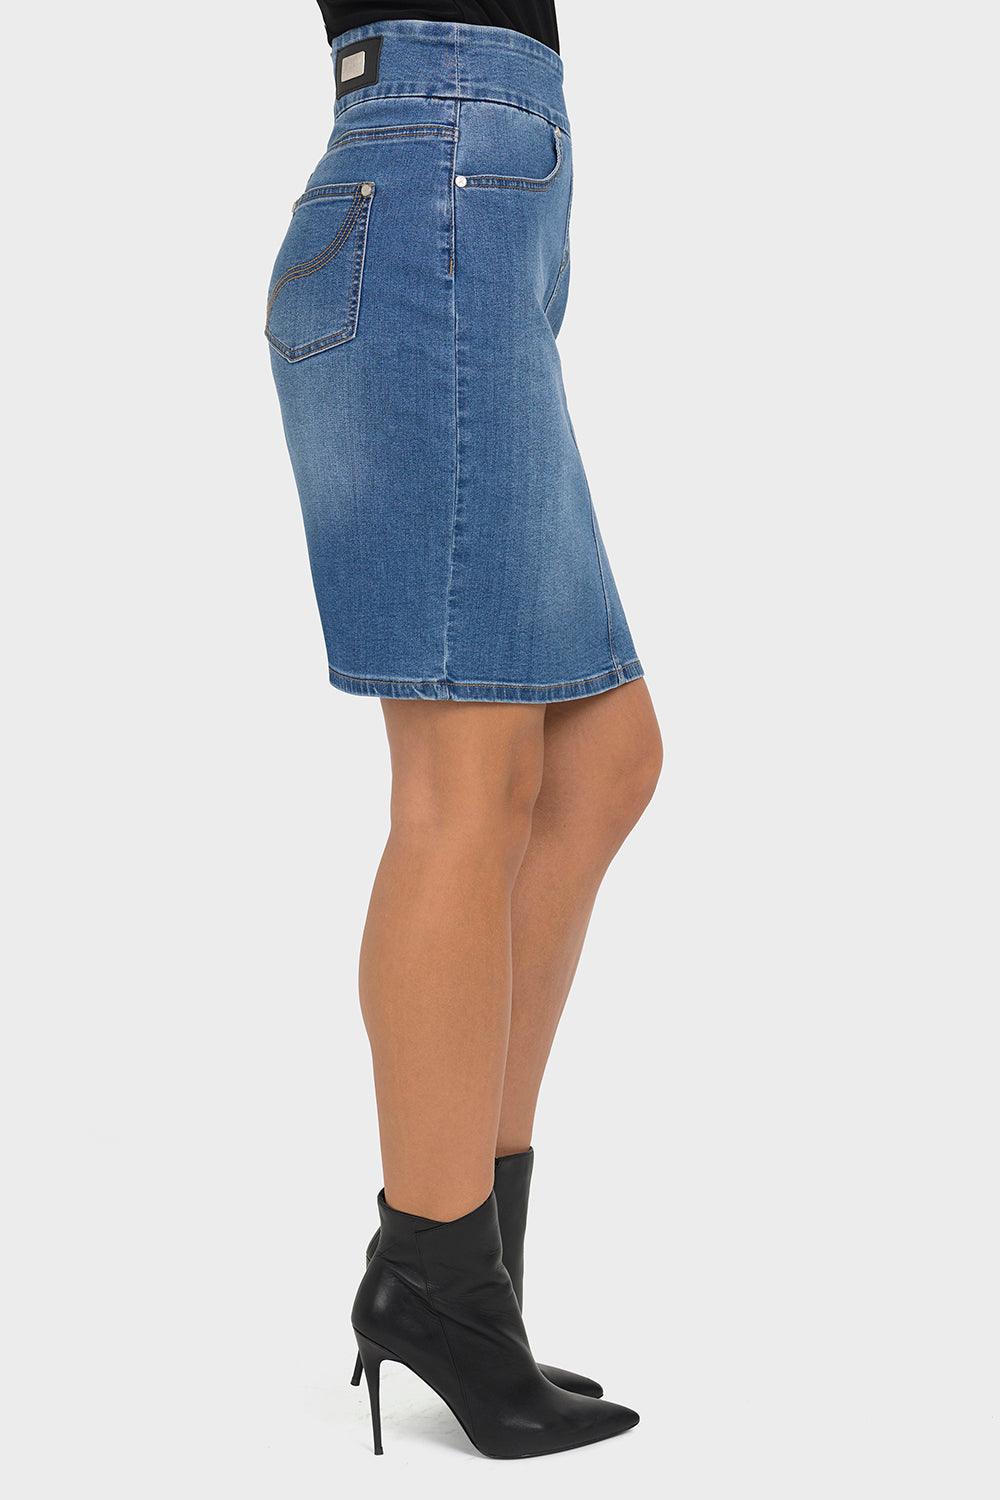 Joseph Ribkoff Blue Denim Skirt Style 193946